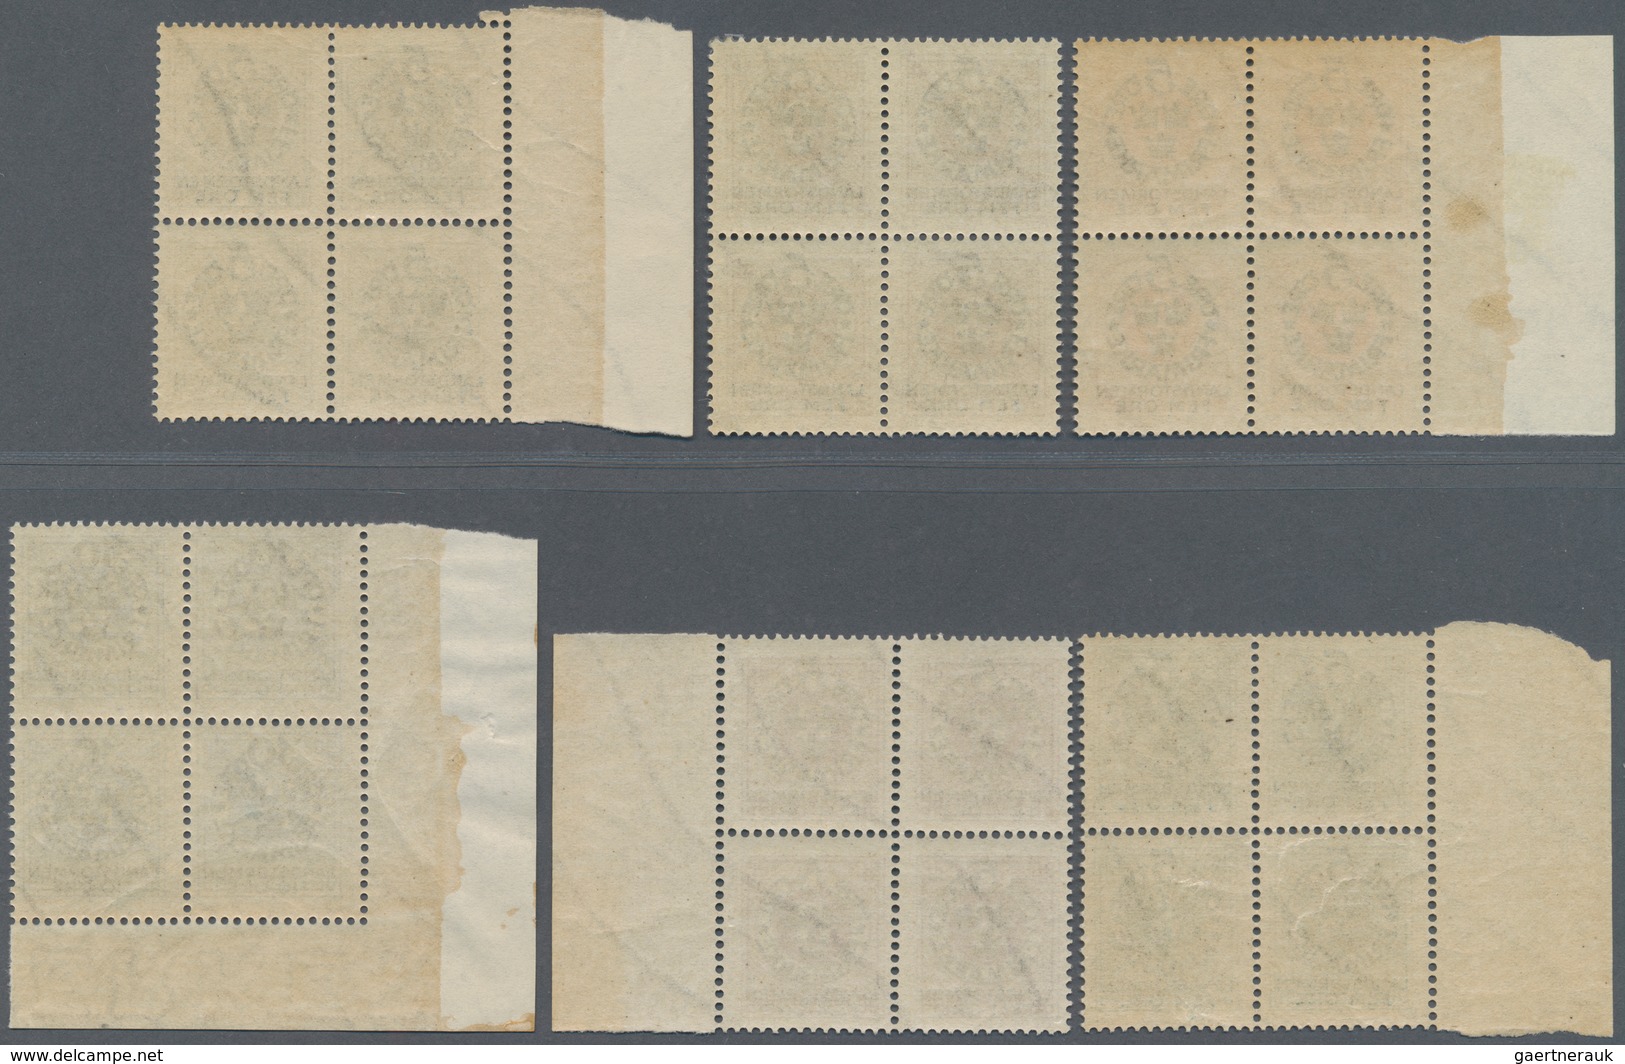 Schweden: 1916, "Landstormen" Overprints, Complete Set Of Eleven Values In (mainly Marginal) Blocks - Gebraucht